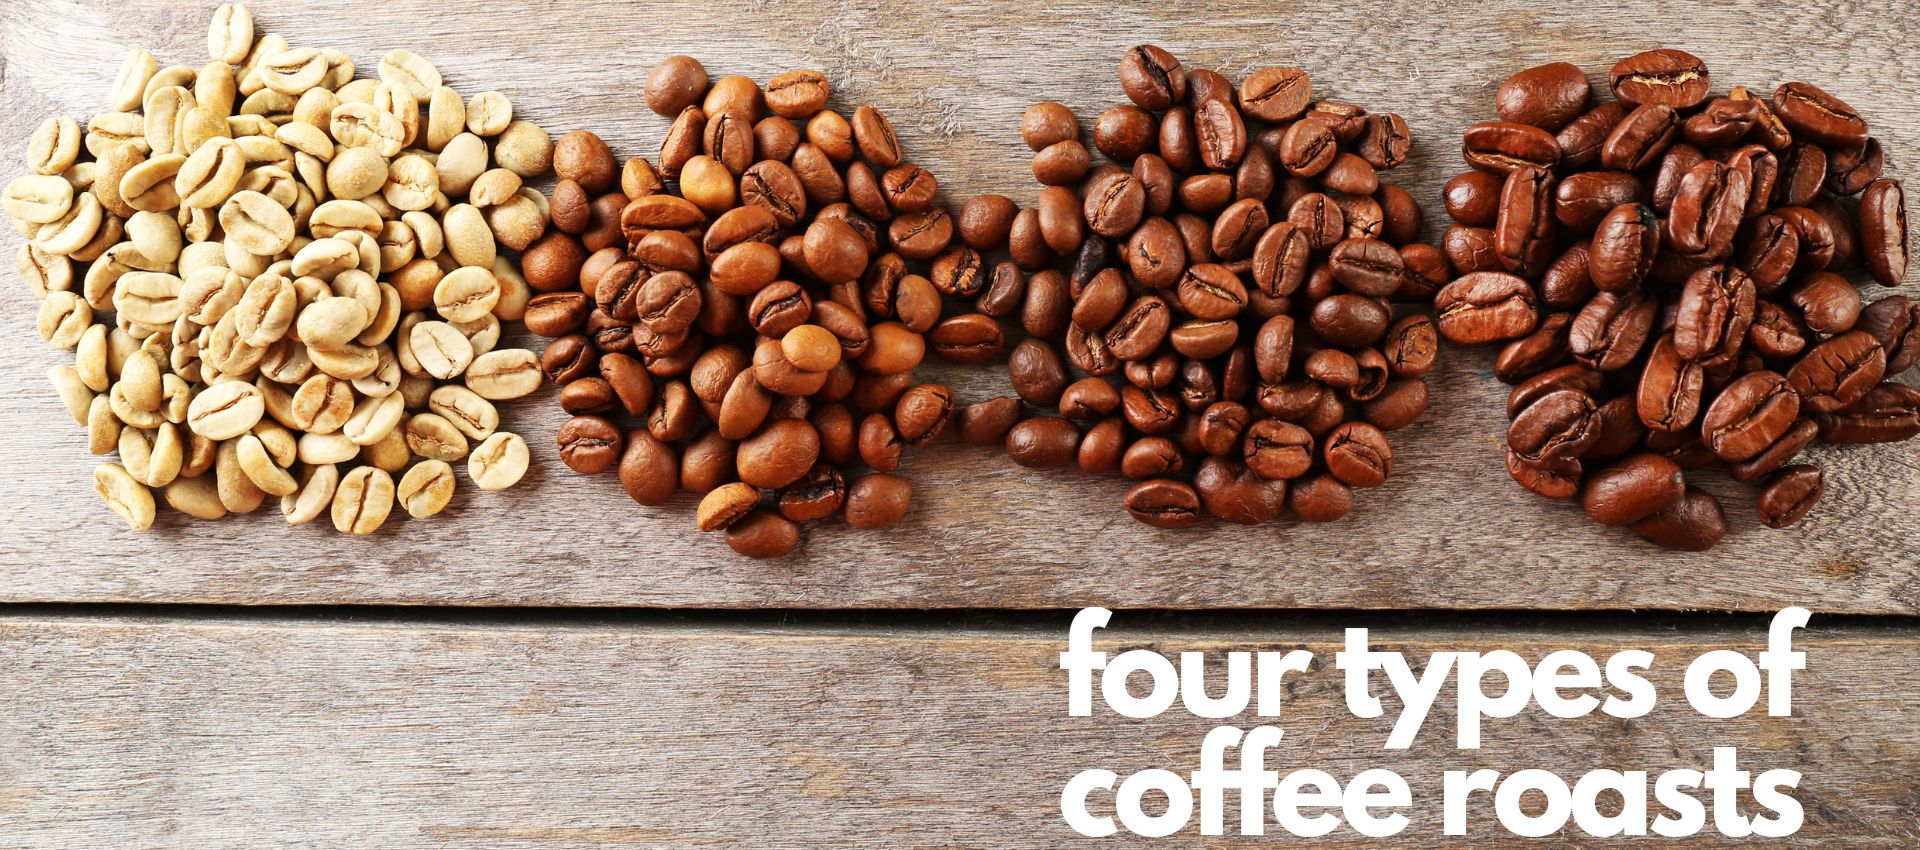 Four types of coffee roast